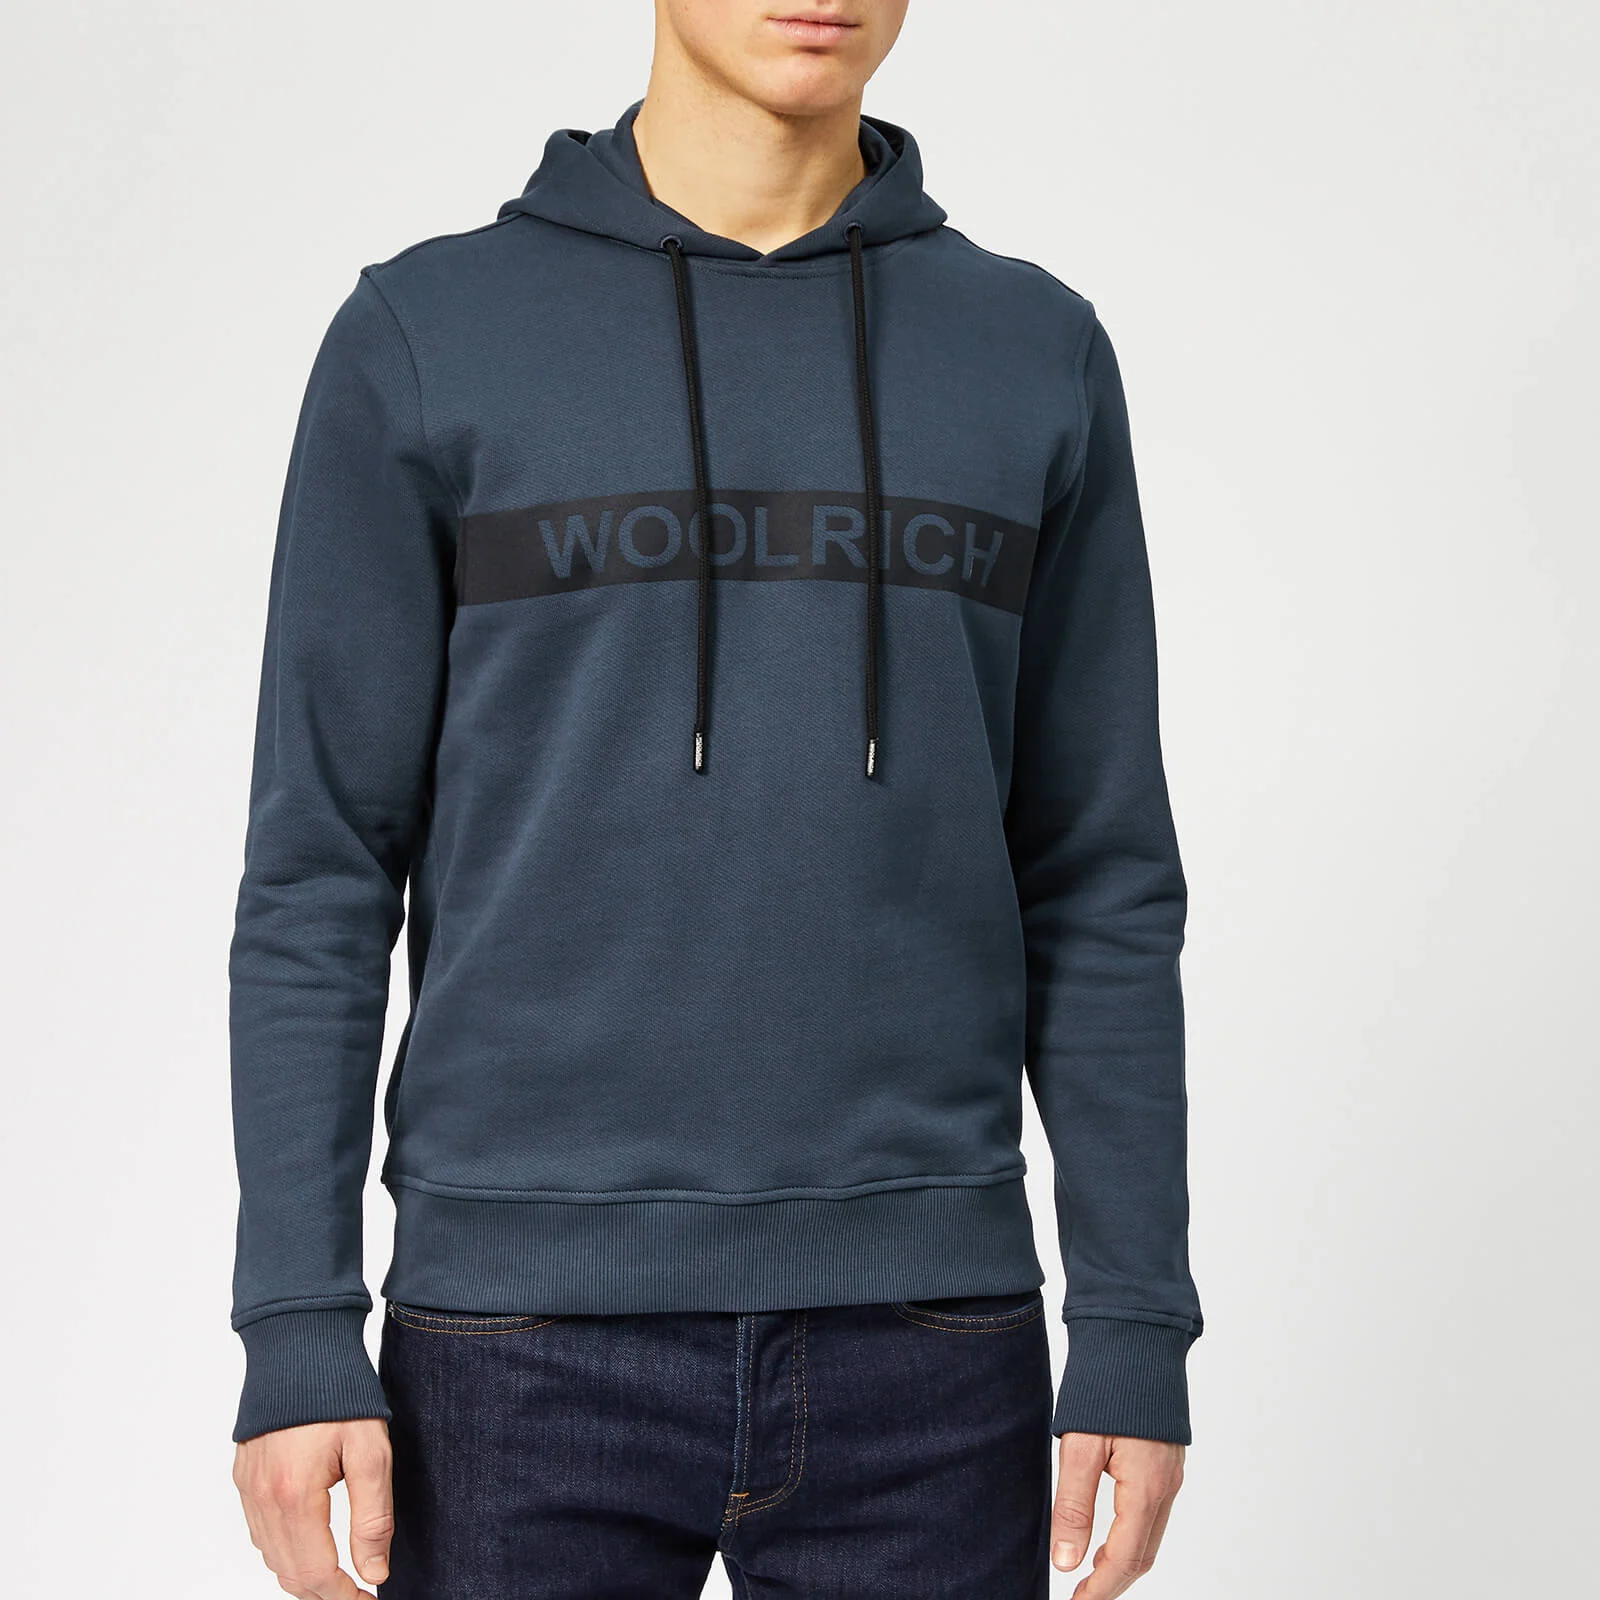 Woolrich Men's Compact Hoodie - Melton Blue Image 1